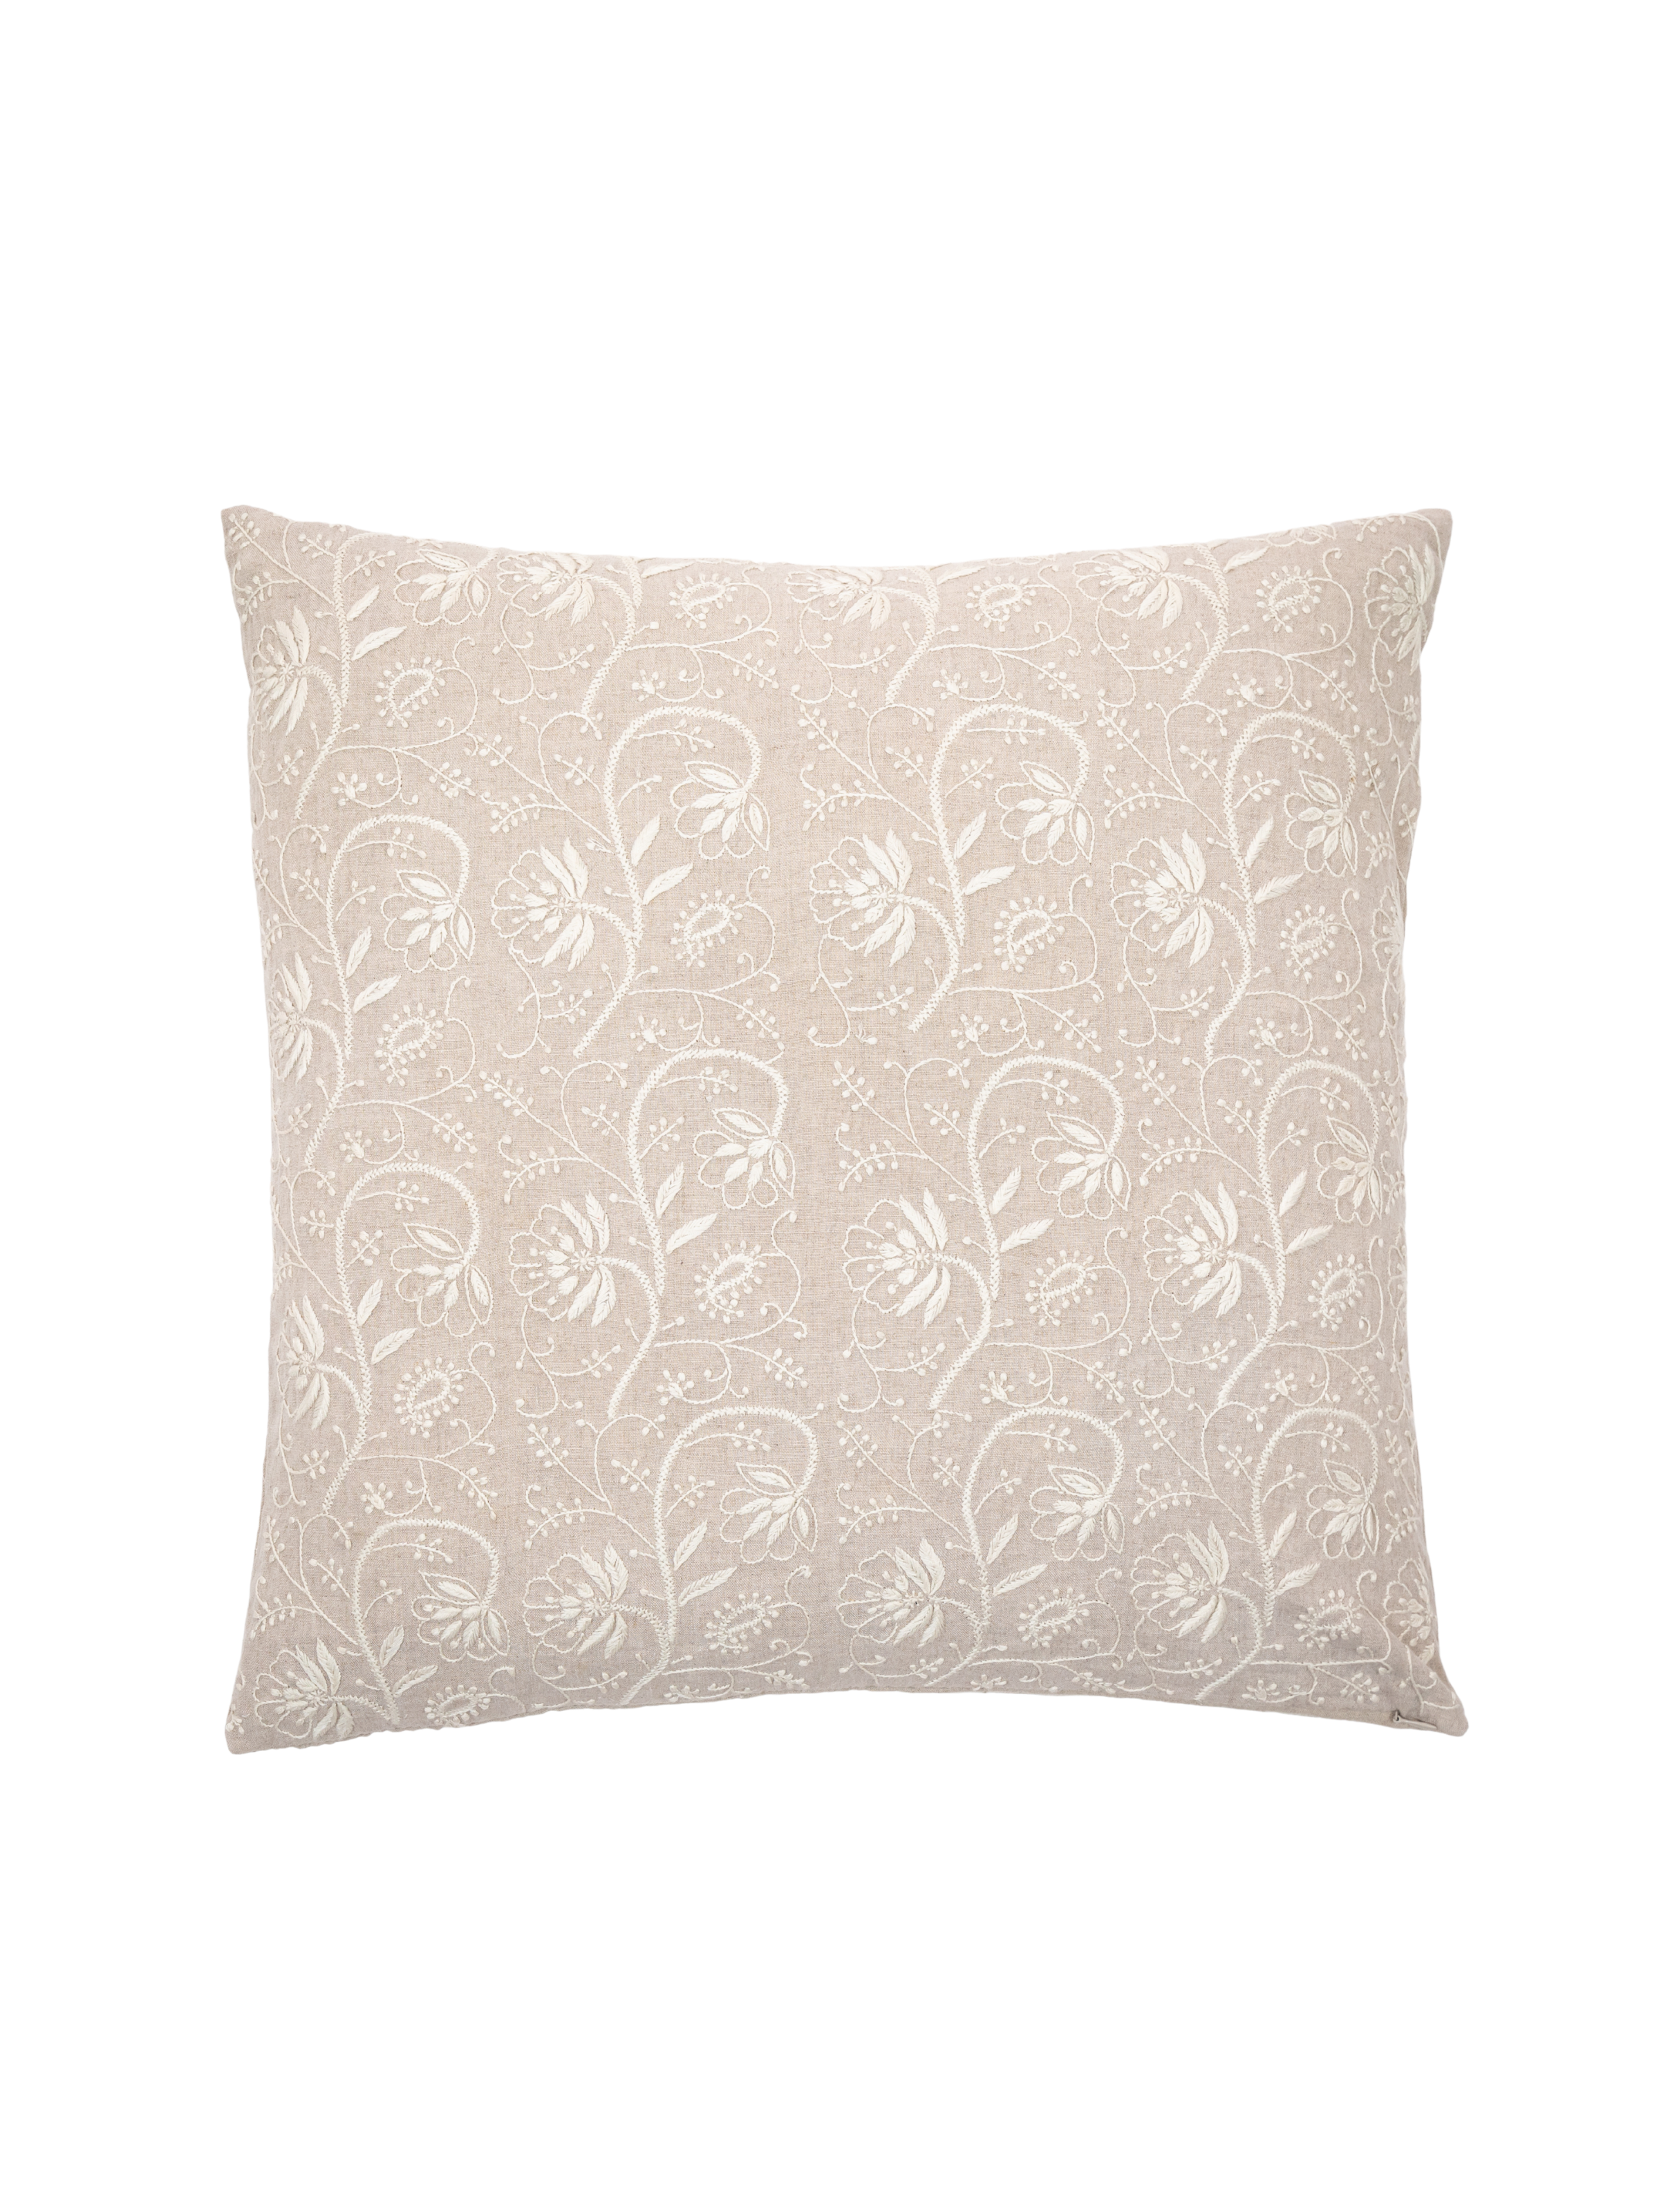 Juliette Natural Linen Hand-Embroidered Pillow Cover